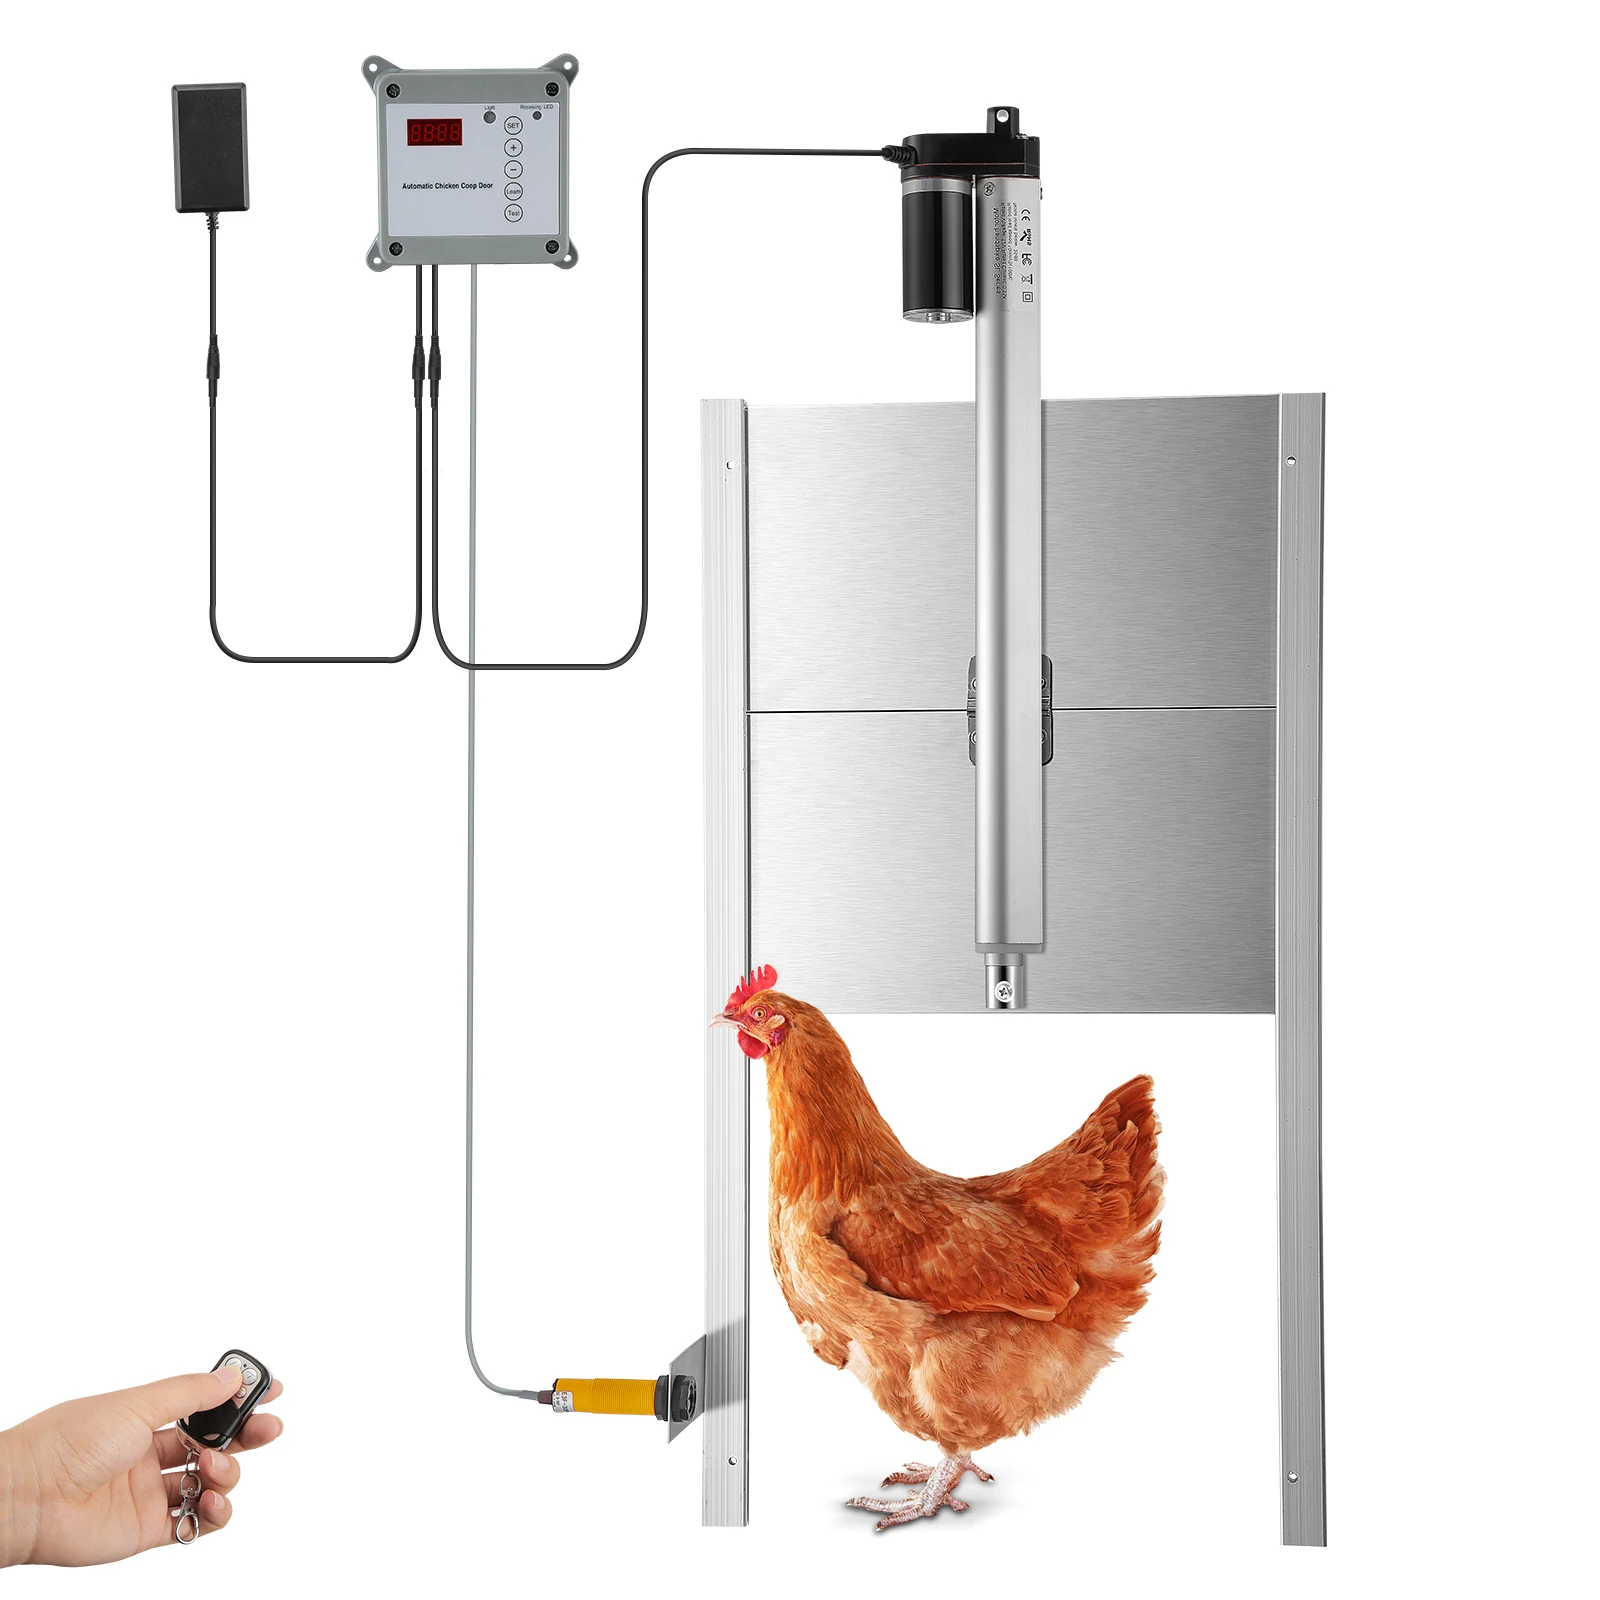 Automatic Chicken Coop Door Opener Kits Rainproof Outdoor With Timer Light Sensor And Remote Control Actuator Motor EU Plug